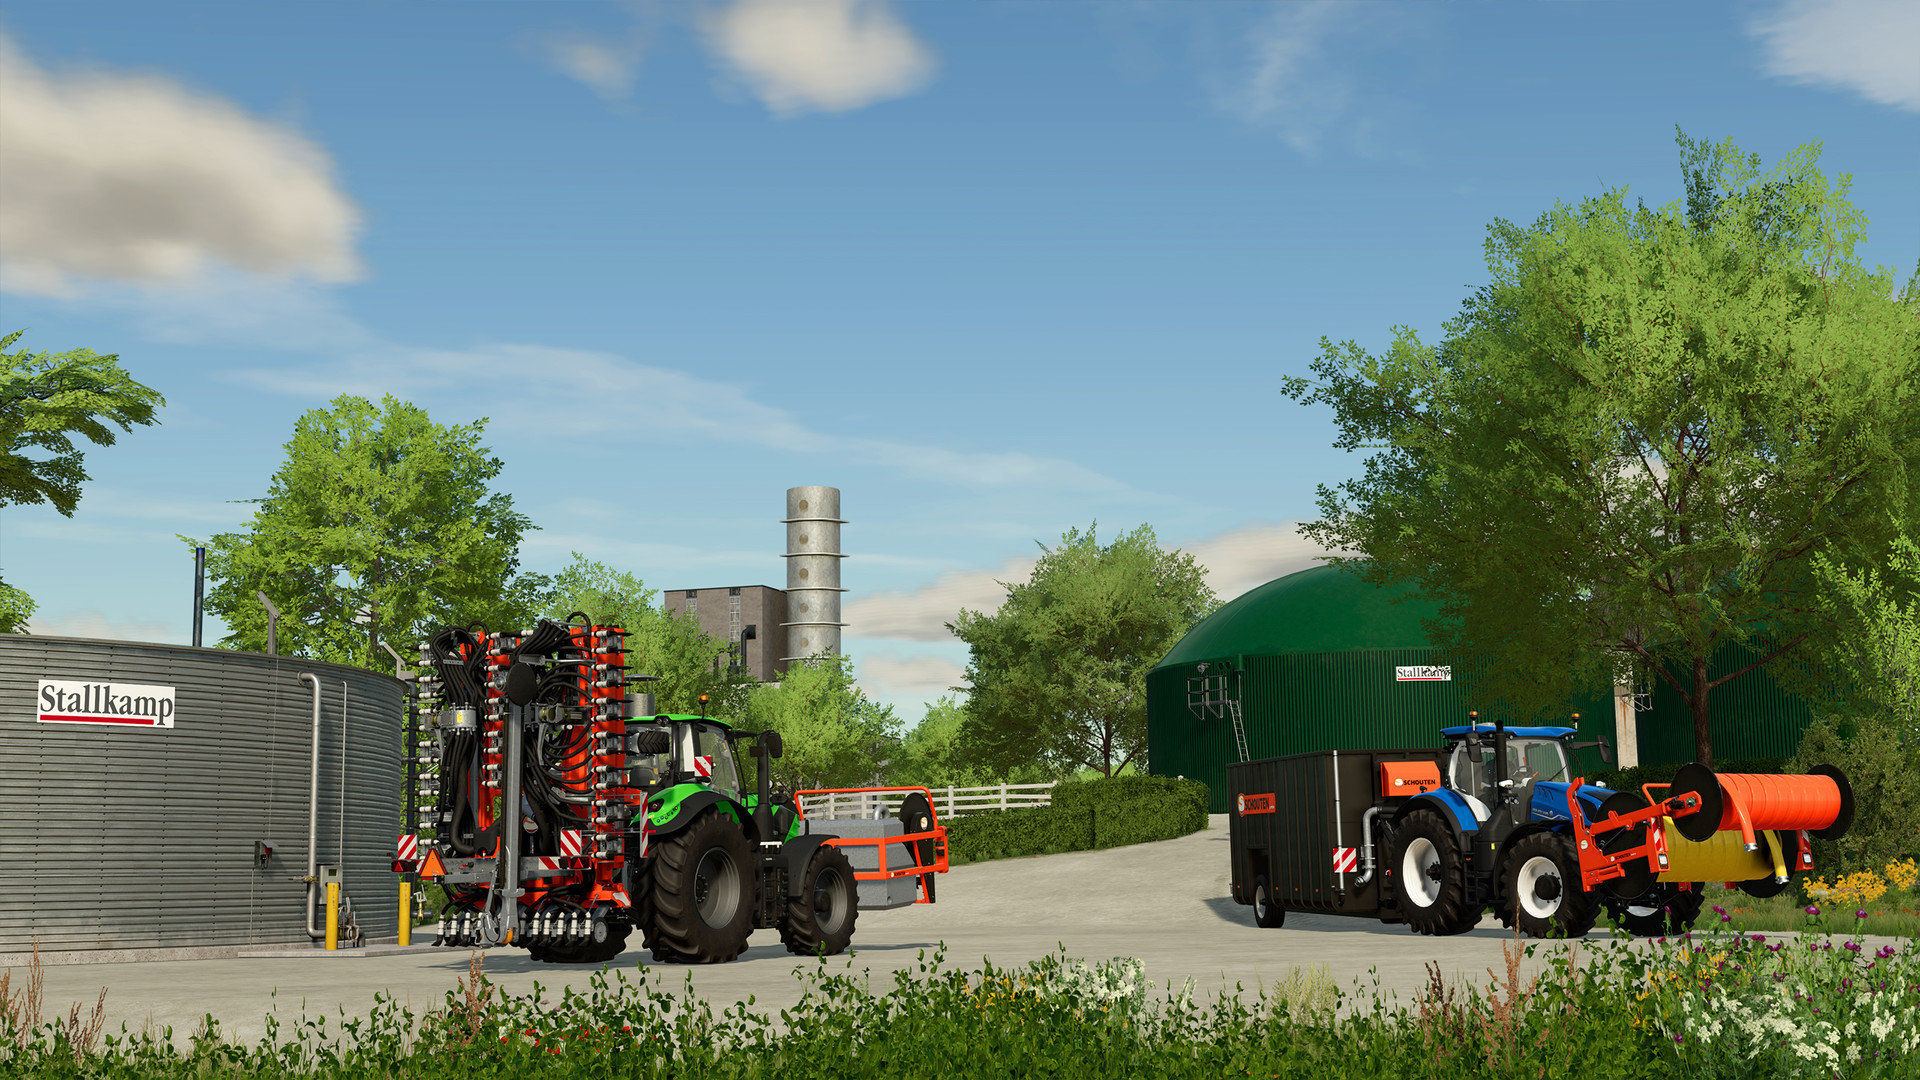 Farming Simulator 22 - Pumps n' Hoses Pack - Steam